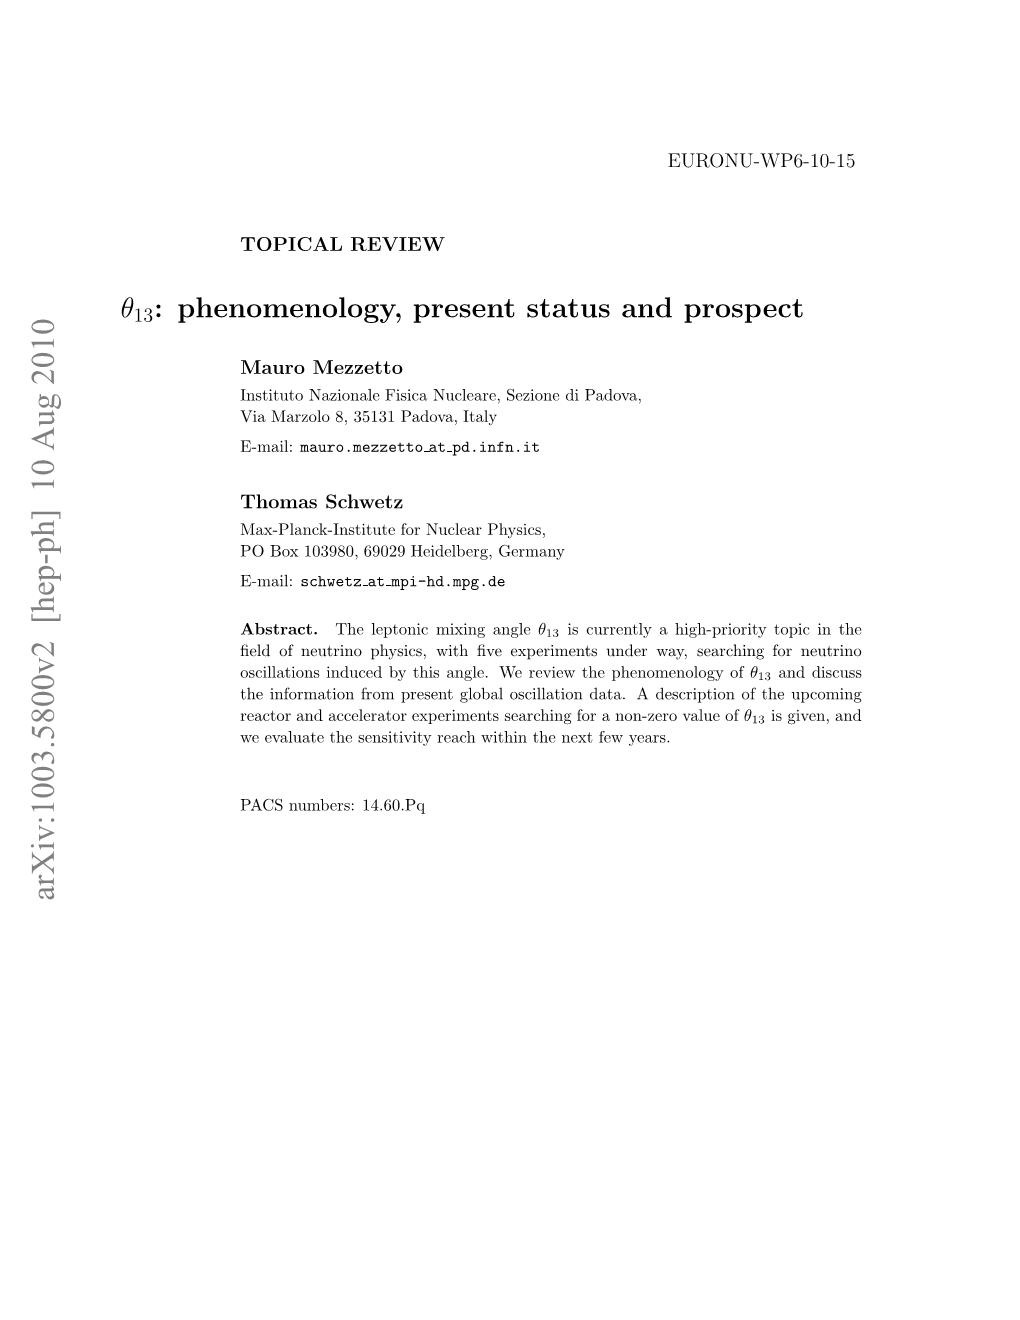 Theta 13: Phenomenology, Present Status and Prospect